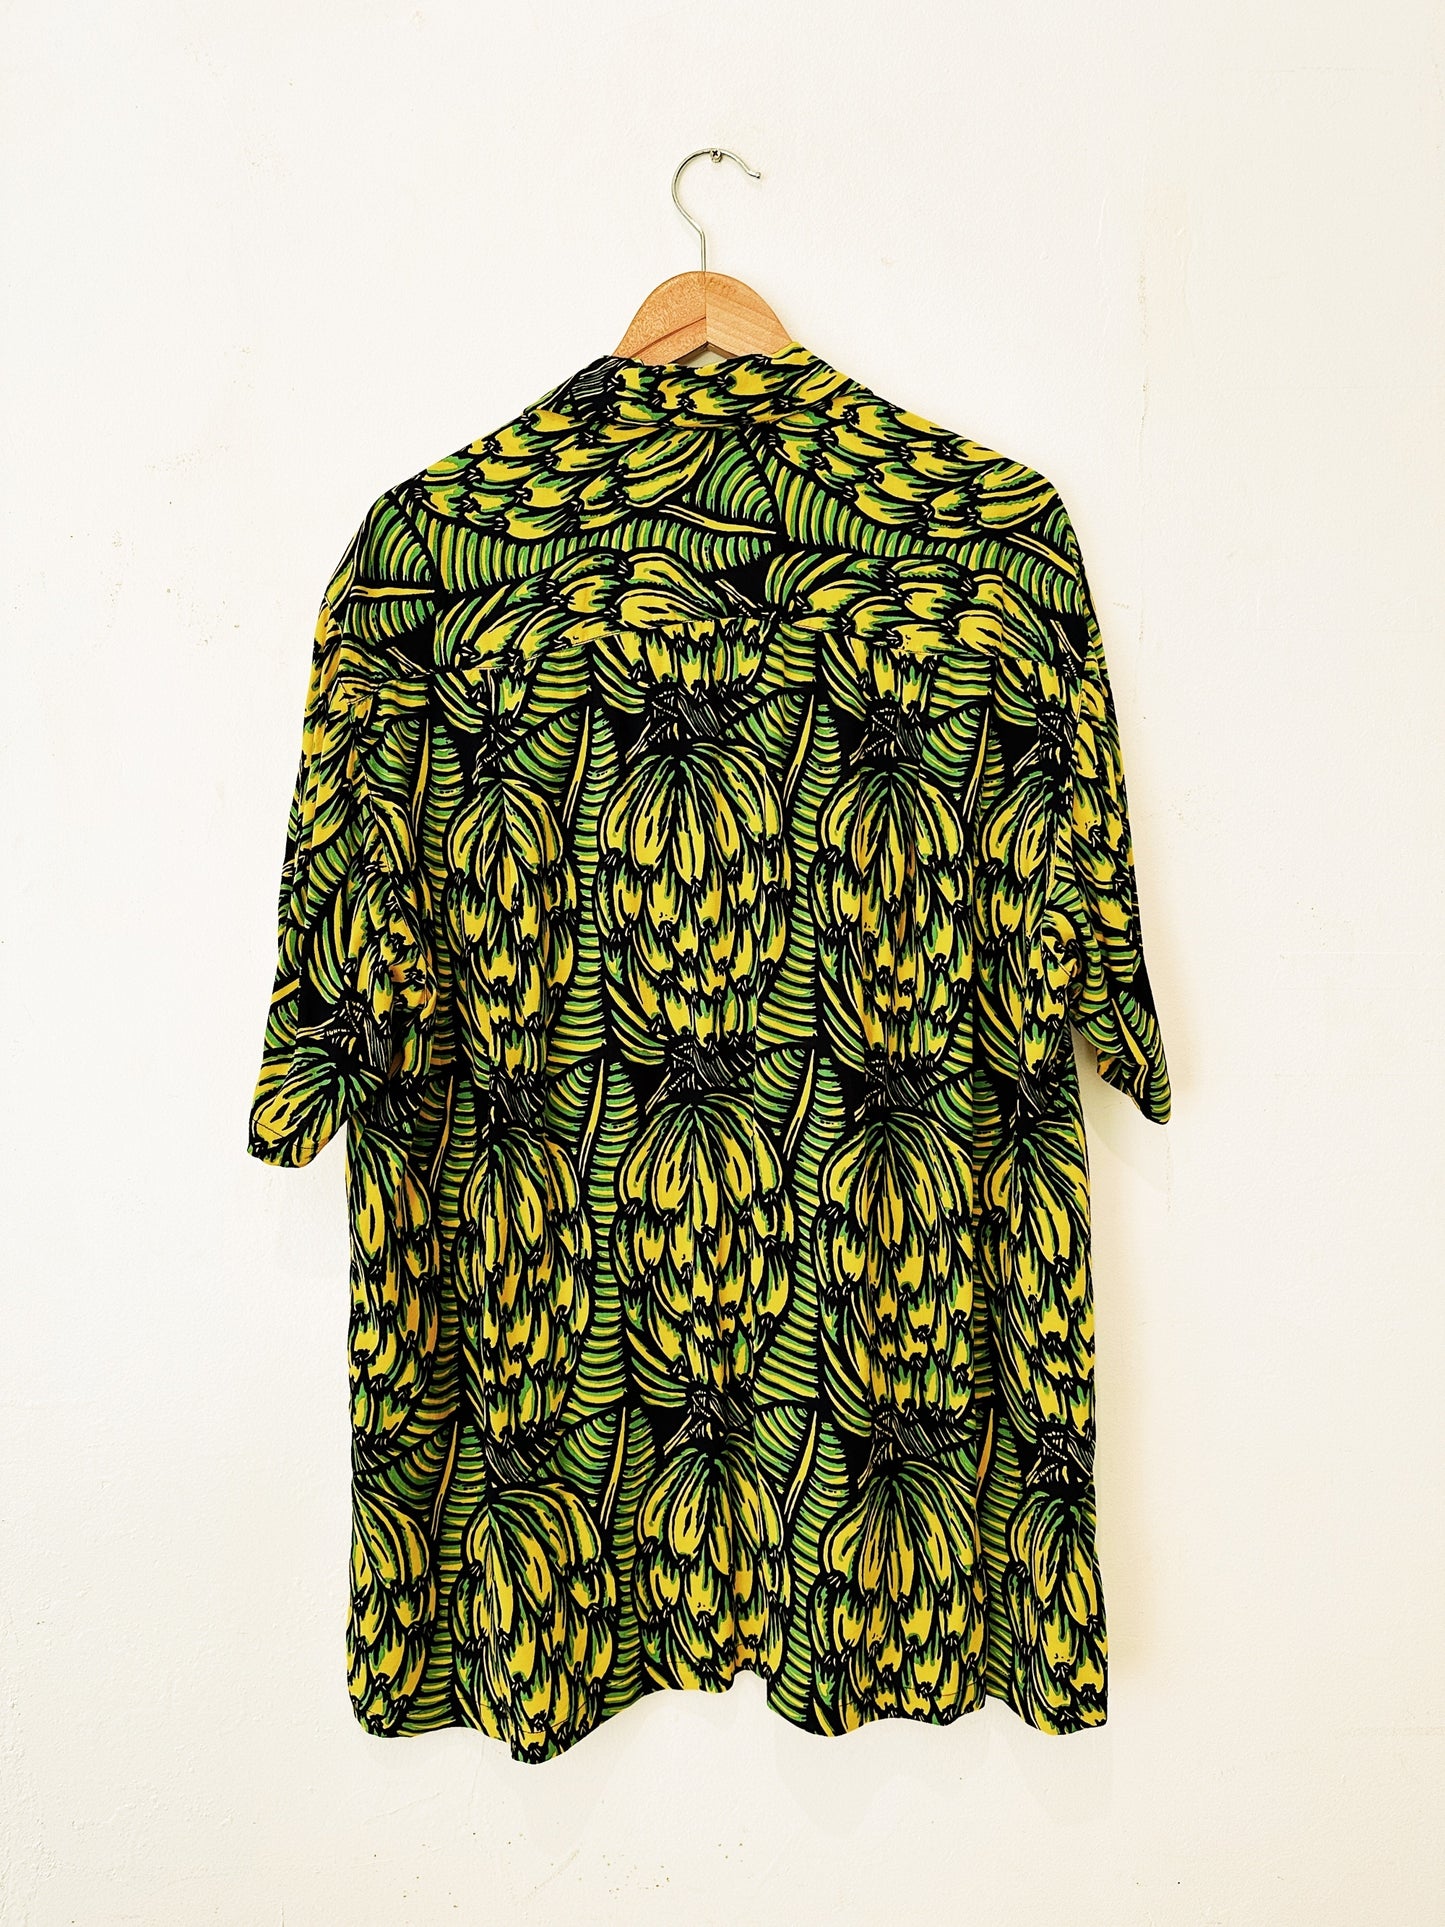 Bruce Goold "Banana's" Vintage Mambo Loud Shirt (Green) 6